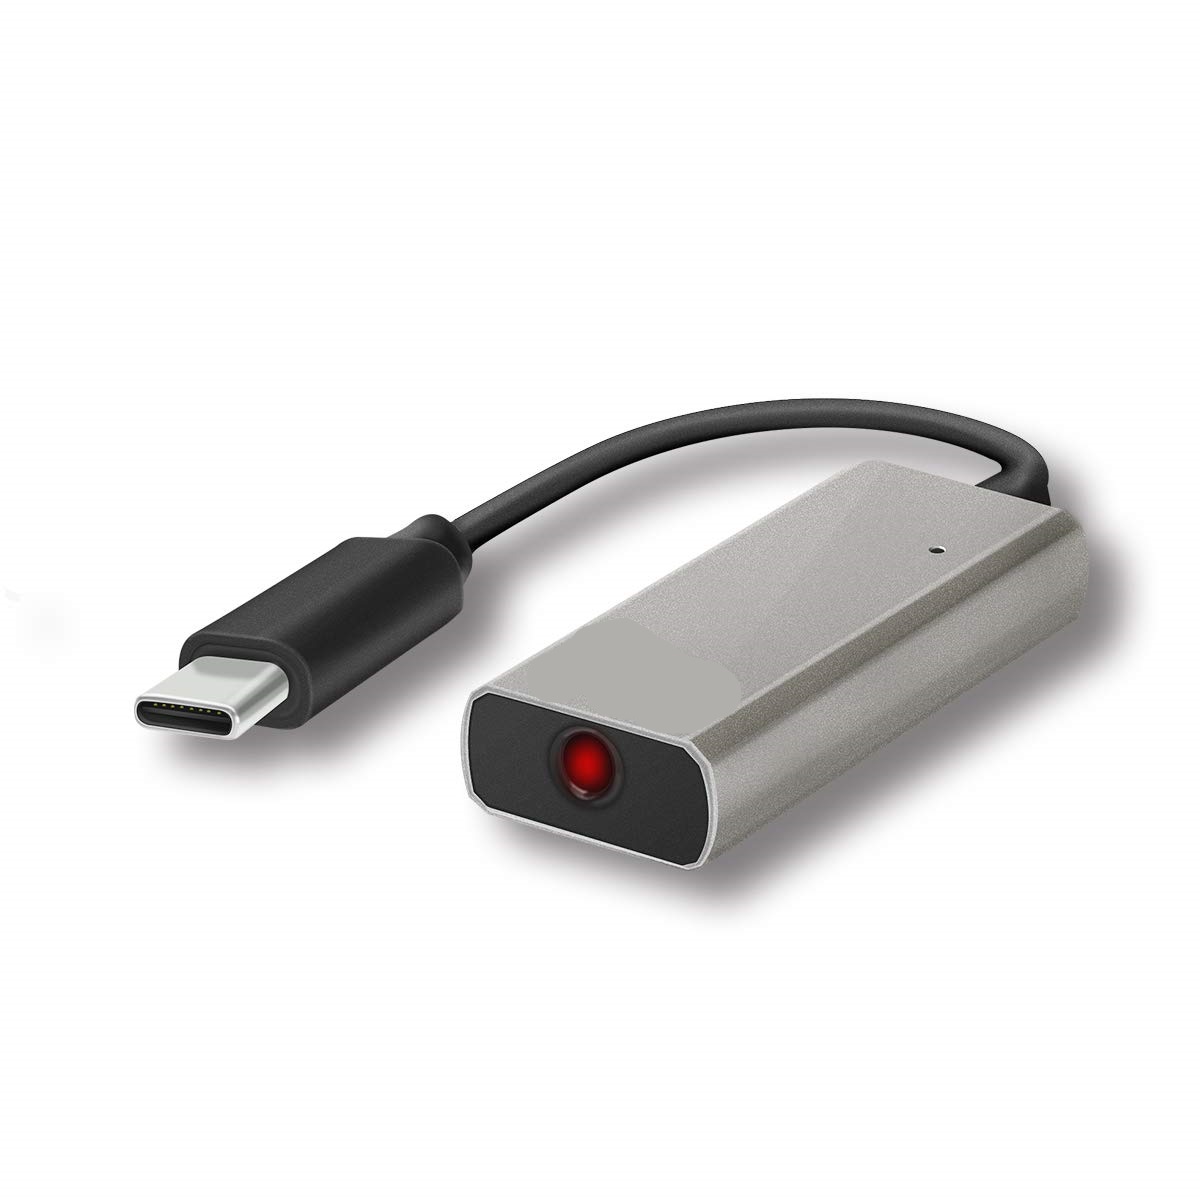 Audio USB Converters Market